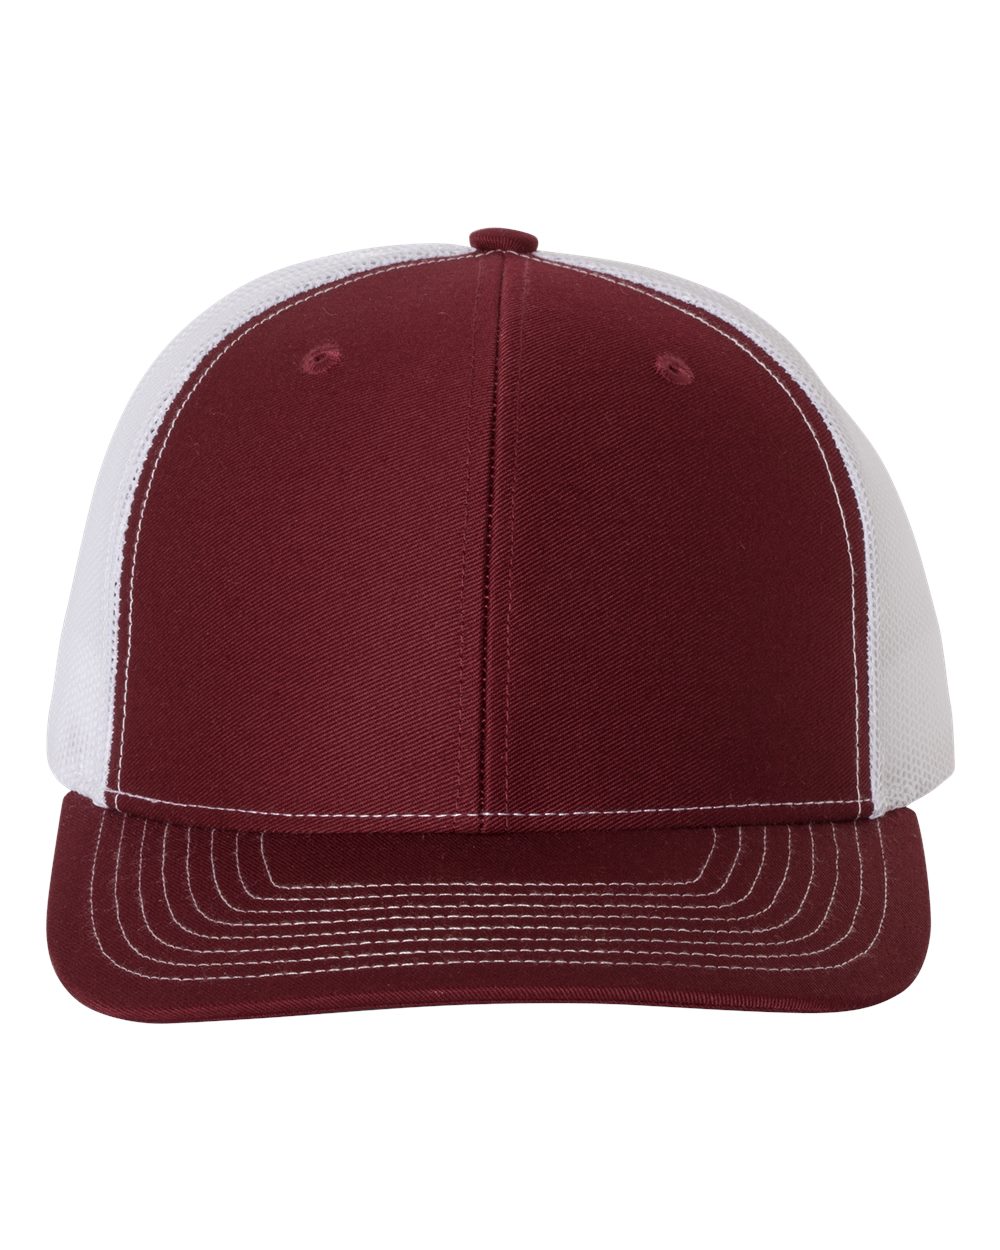 Richardson Snapback Trucker Hat (112) in Cardinal/White